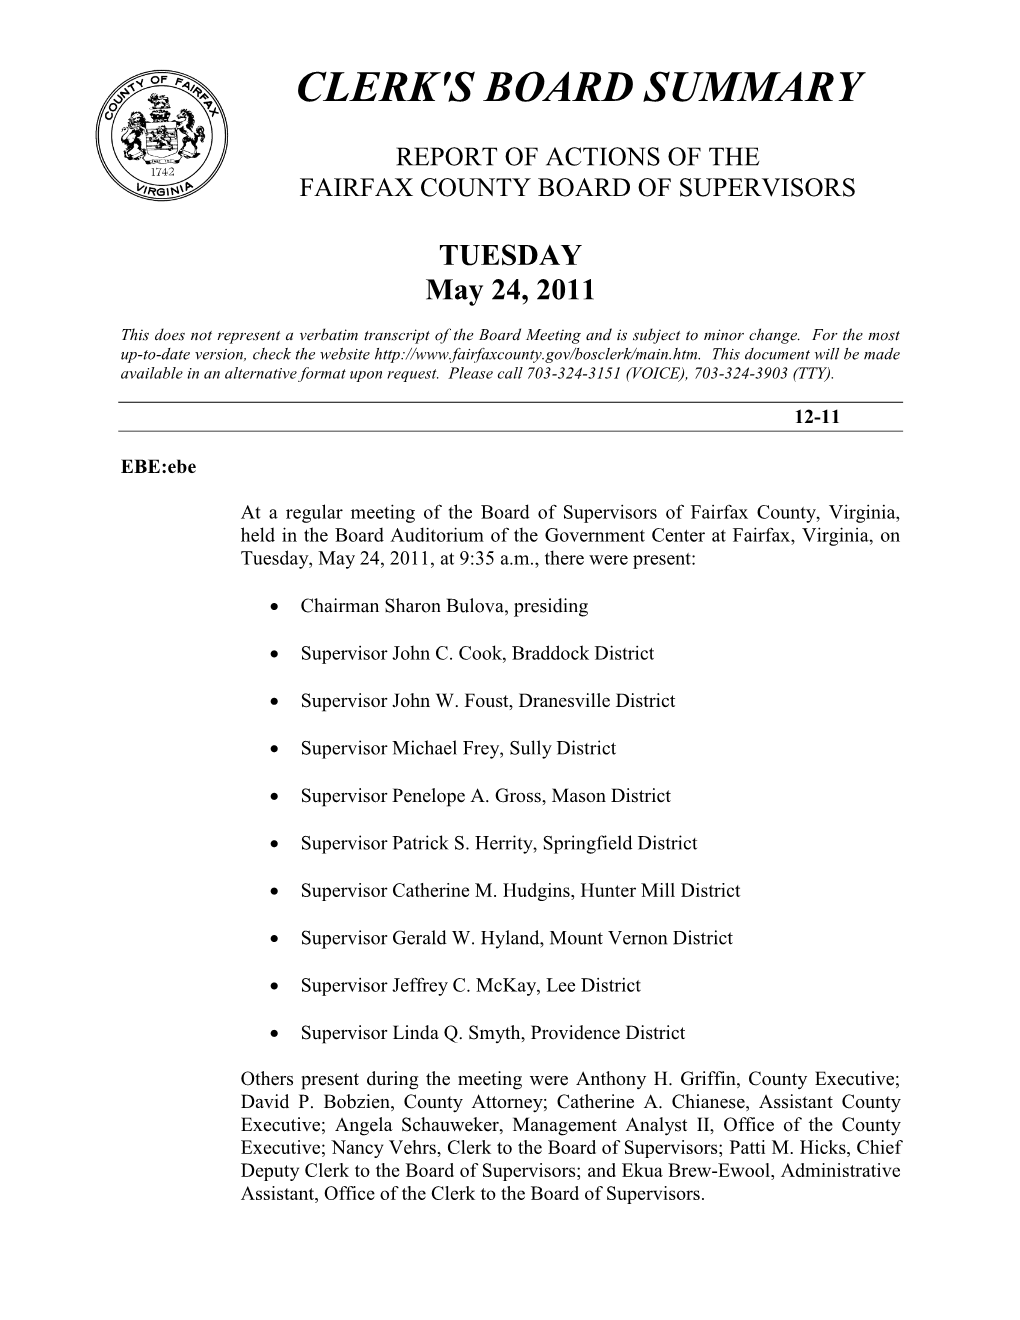 May 24, 2011 Board of Supervisors Meeting Summary